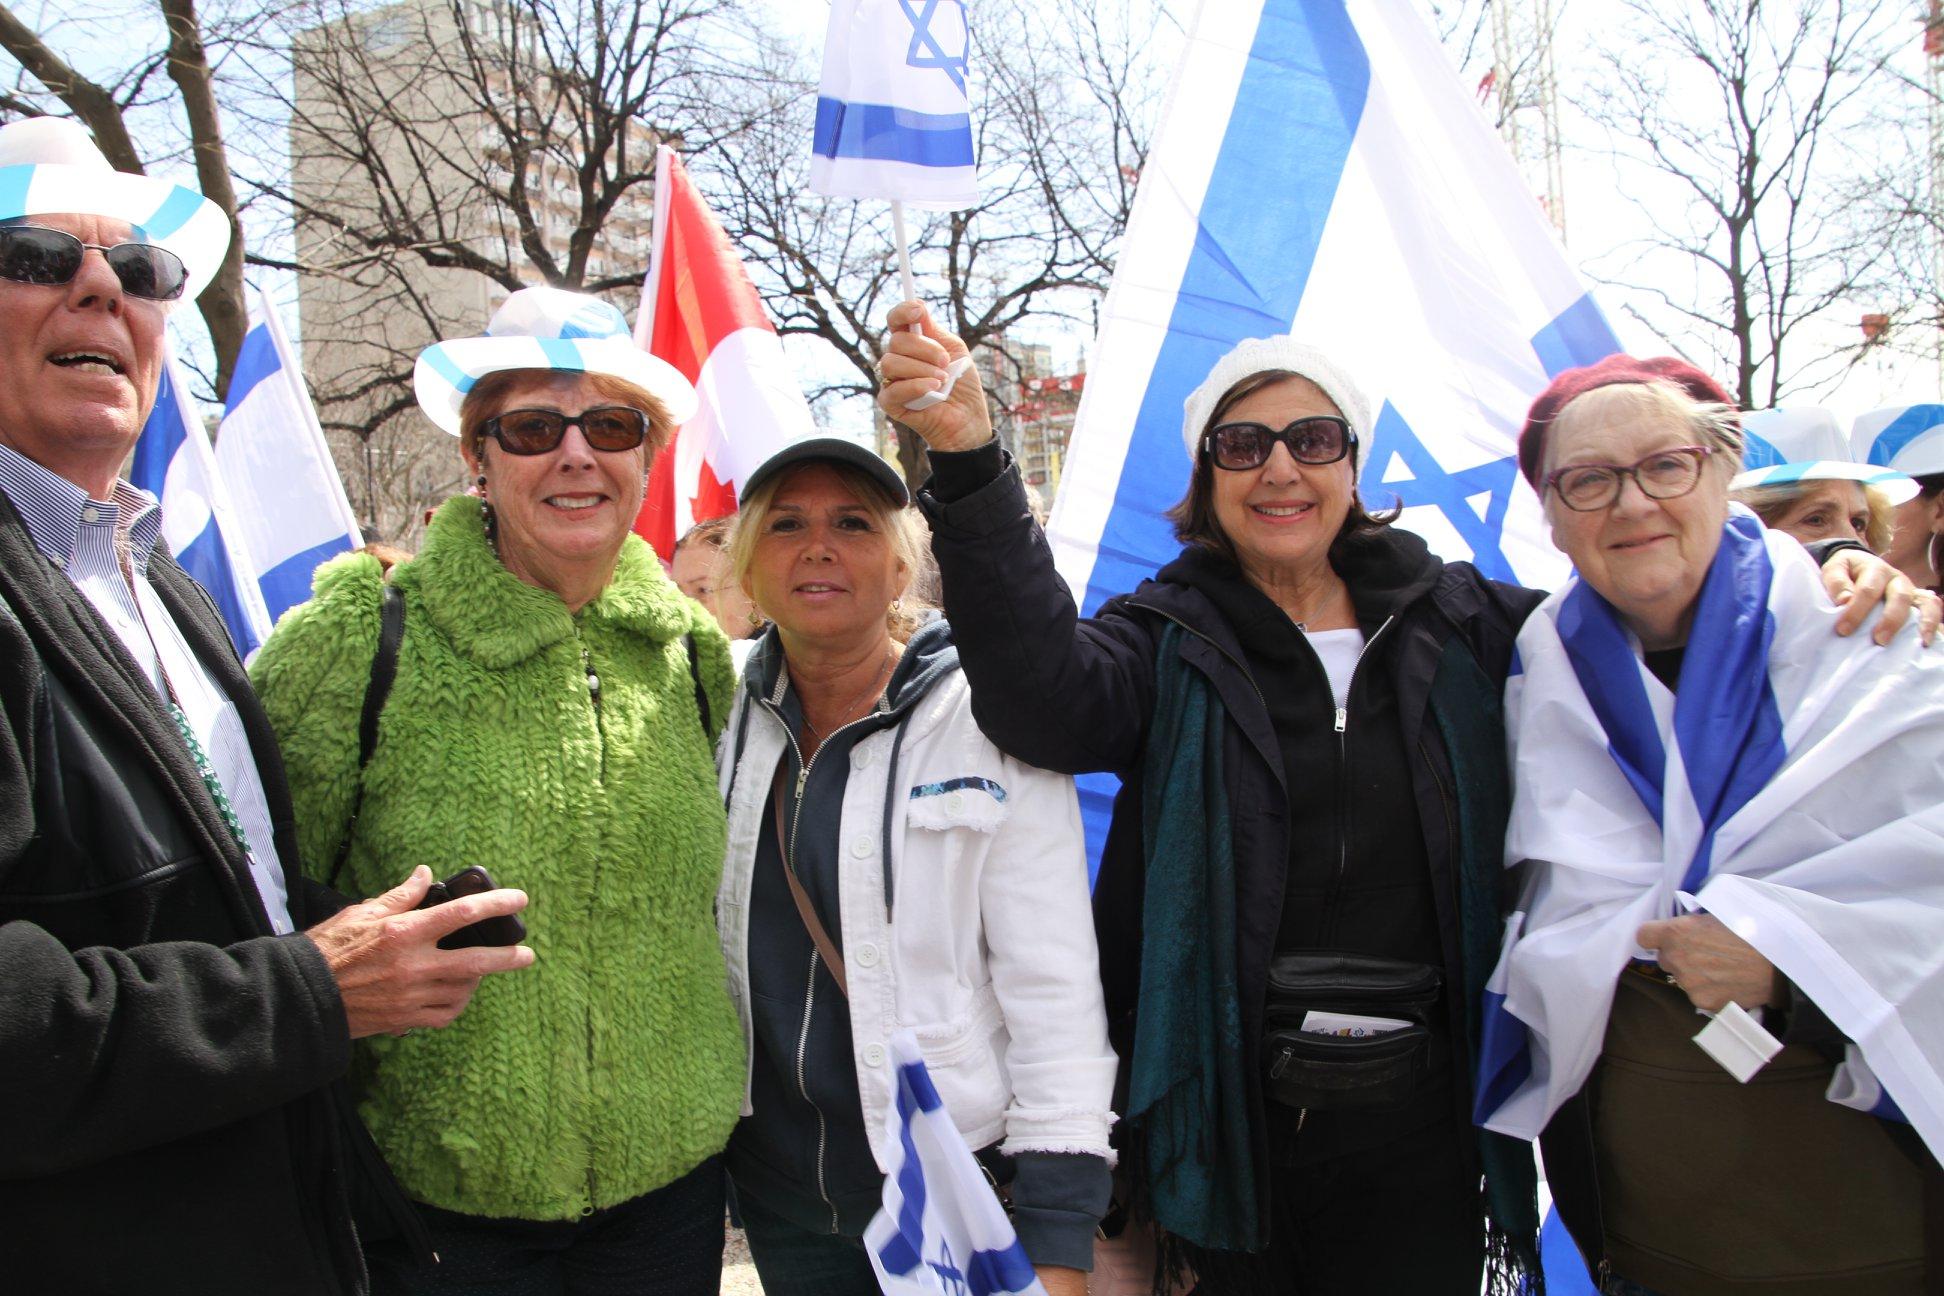 israel day parade-20201130-143843.jpg